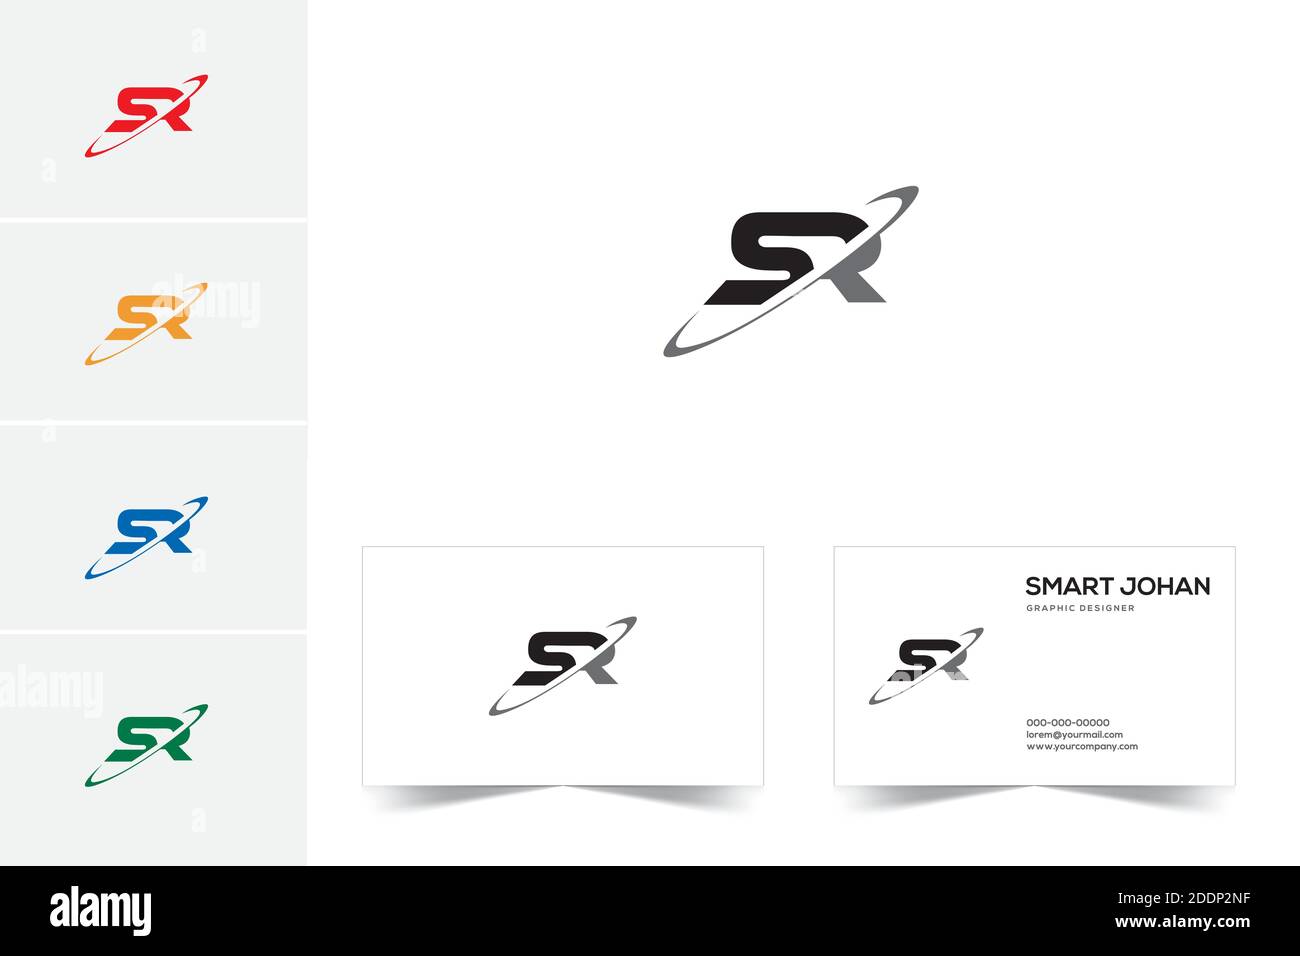 SR Letter Logo Design with Creative Modern Trendy Typography. Stock Vector